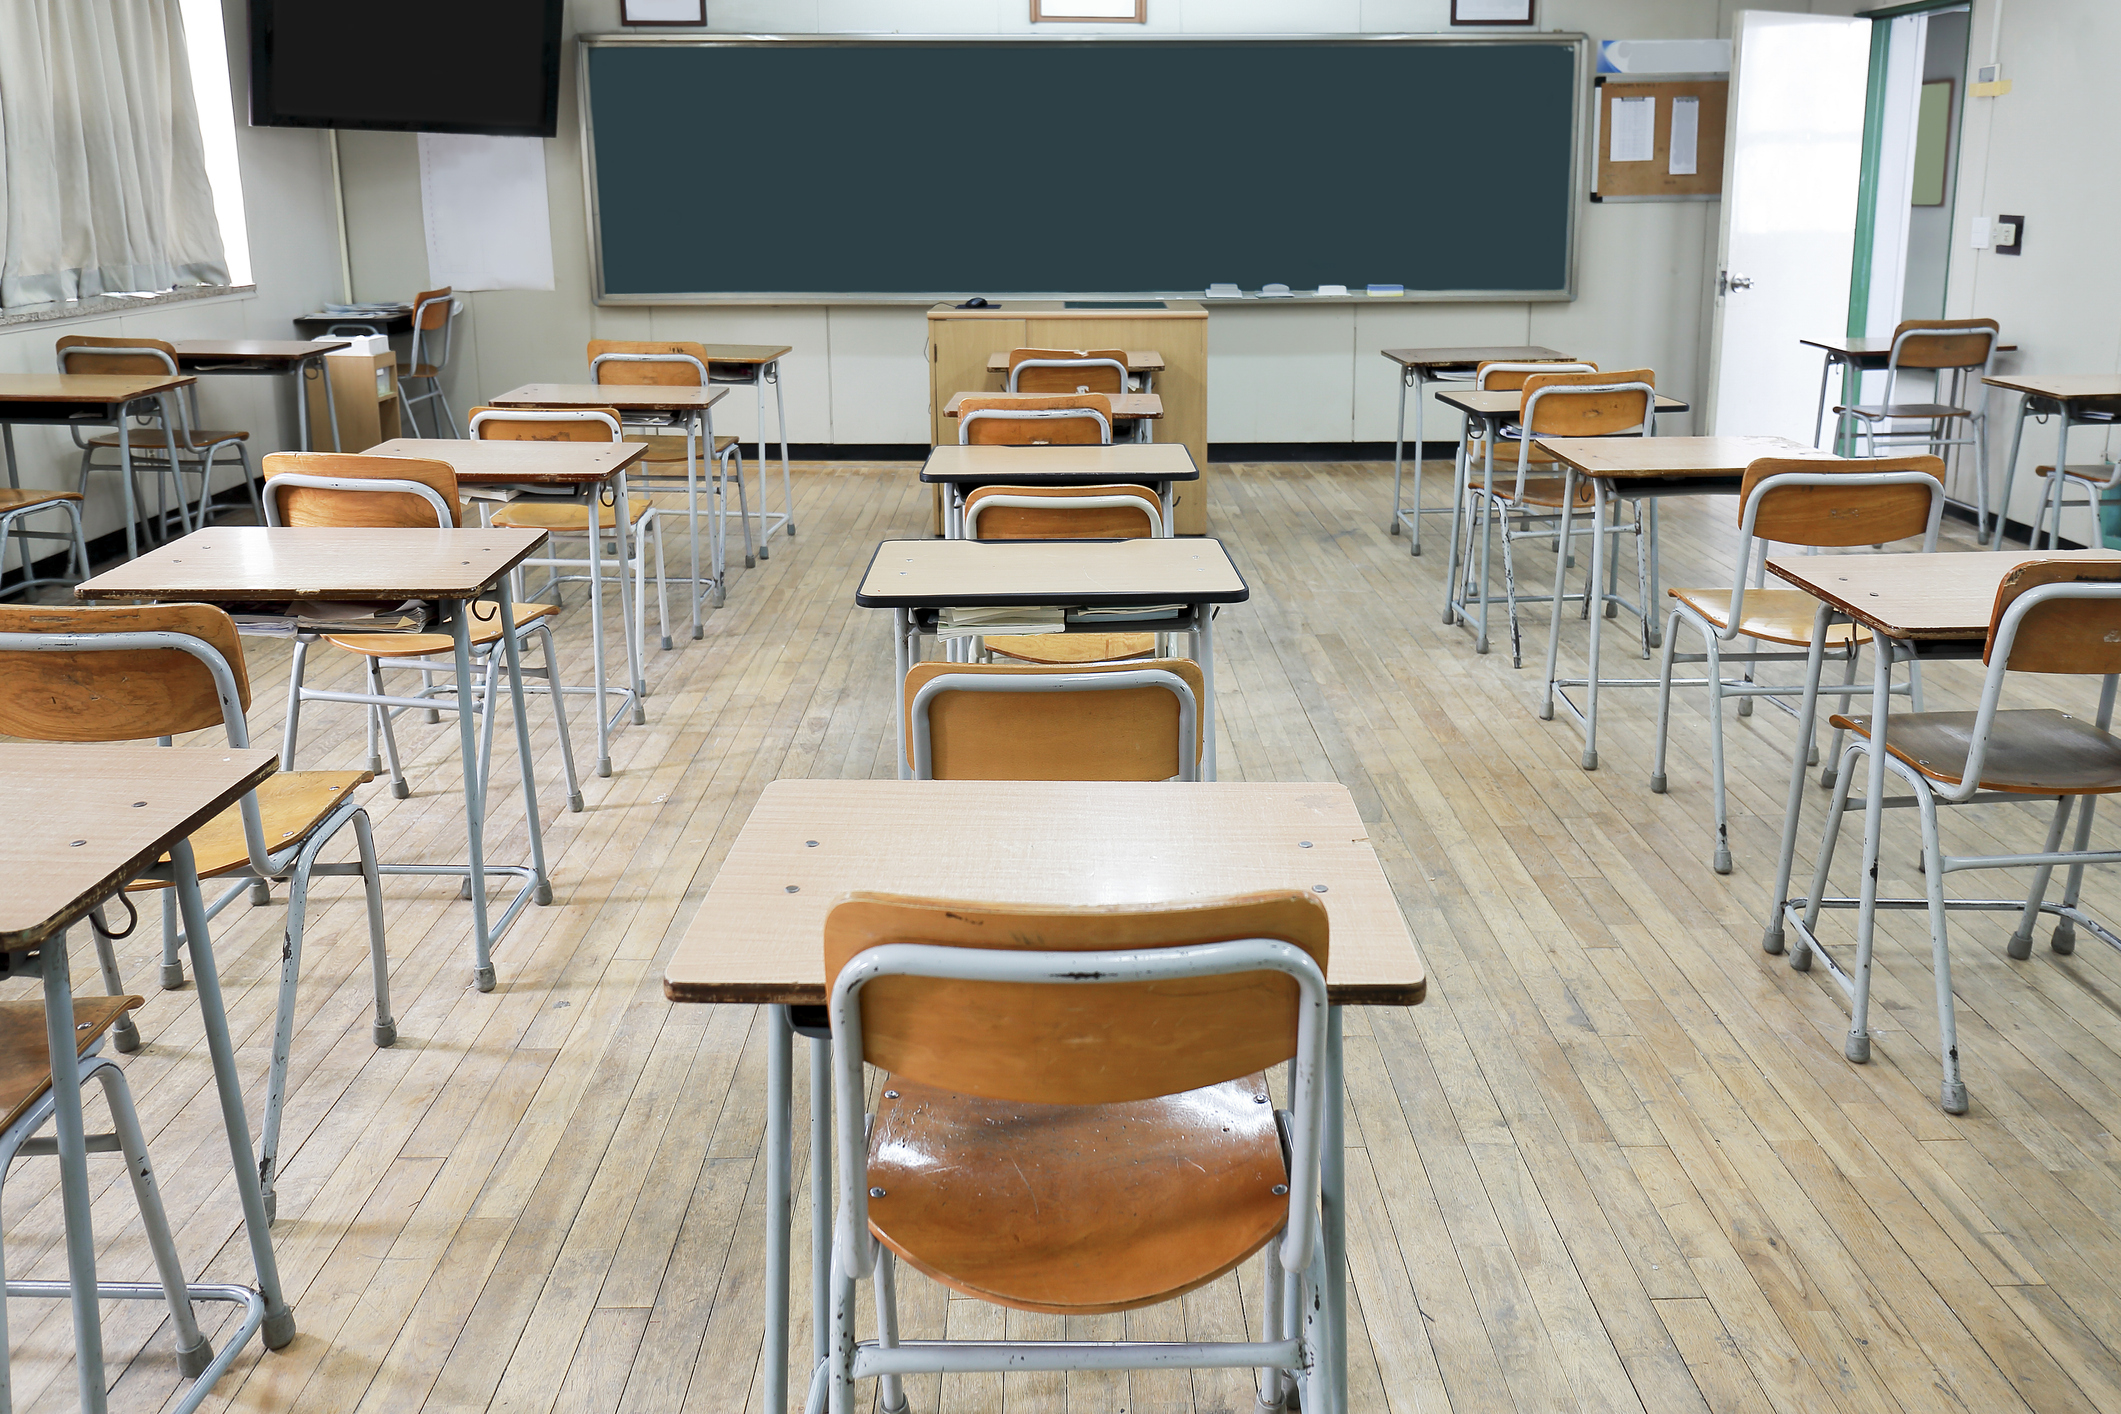 Survey shows widespread concern over educator shortage among teachers, school staff